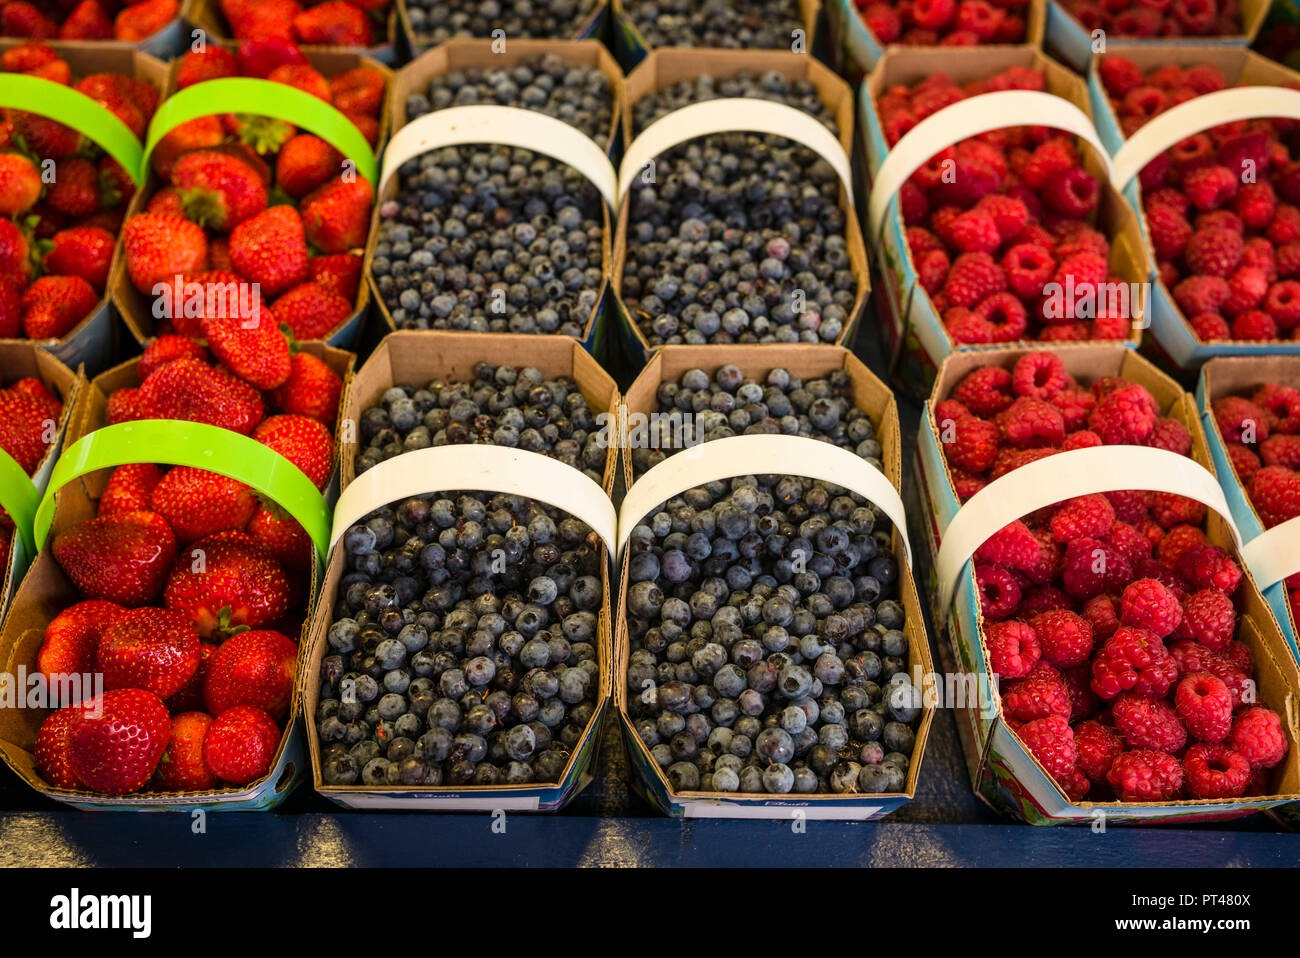 Canada, Quebec, Montreal, Little Italy, Marche Jean Talon market, autumn, berries Stock Photo